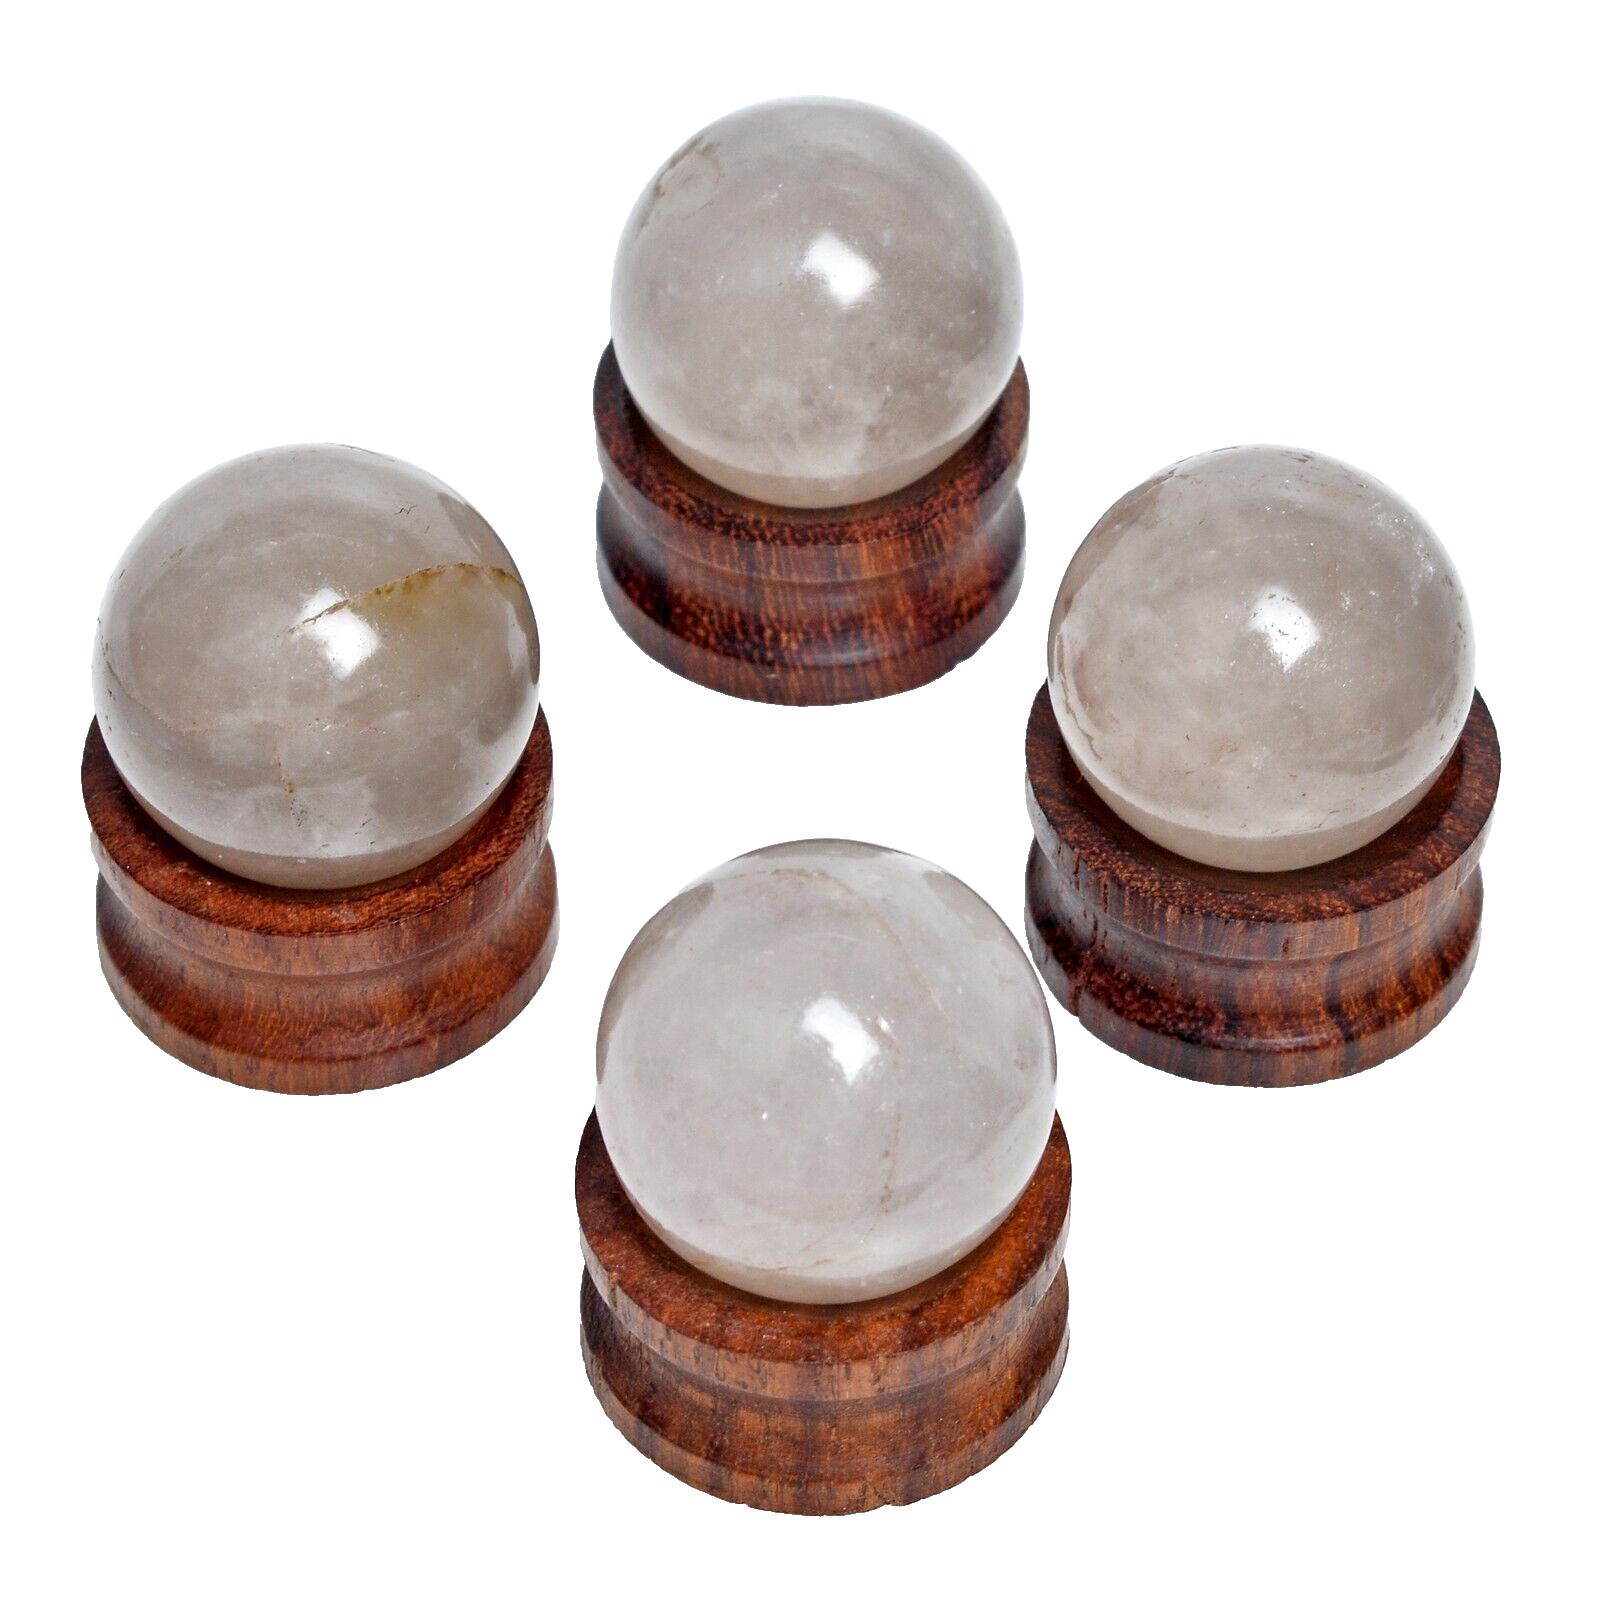 4 Pcs Natural Mini Sphere Quartz Crystal ball Reiki Healing Gemstones with Stand